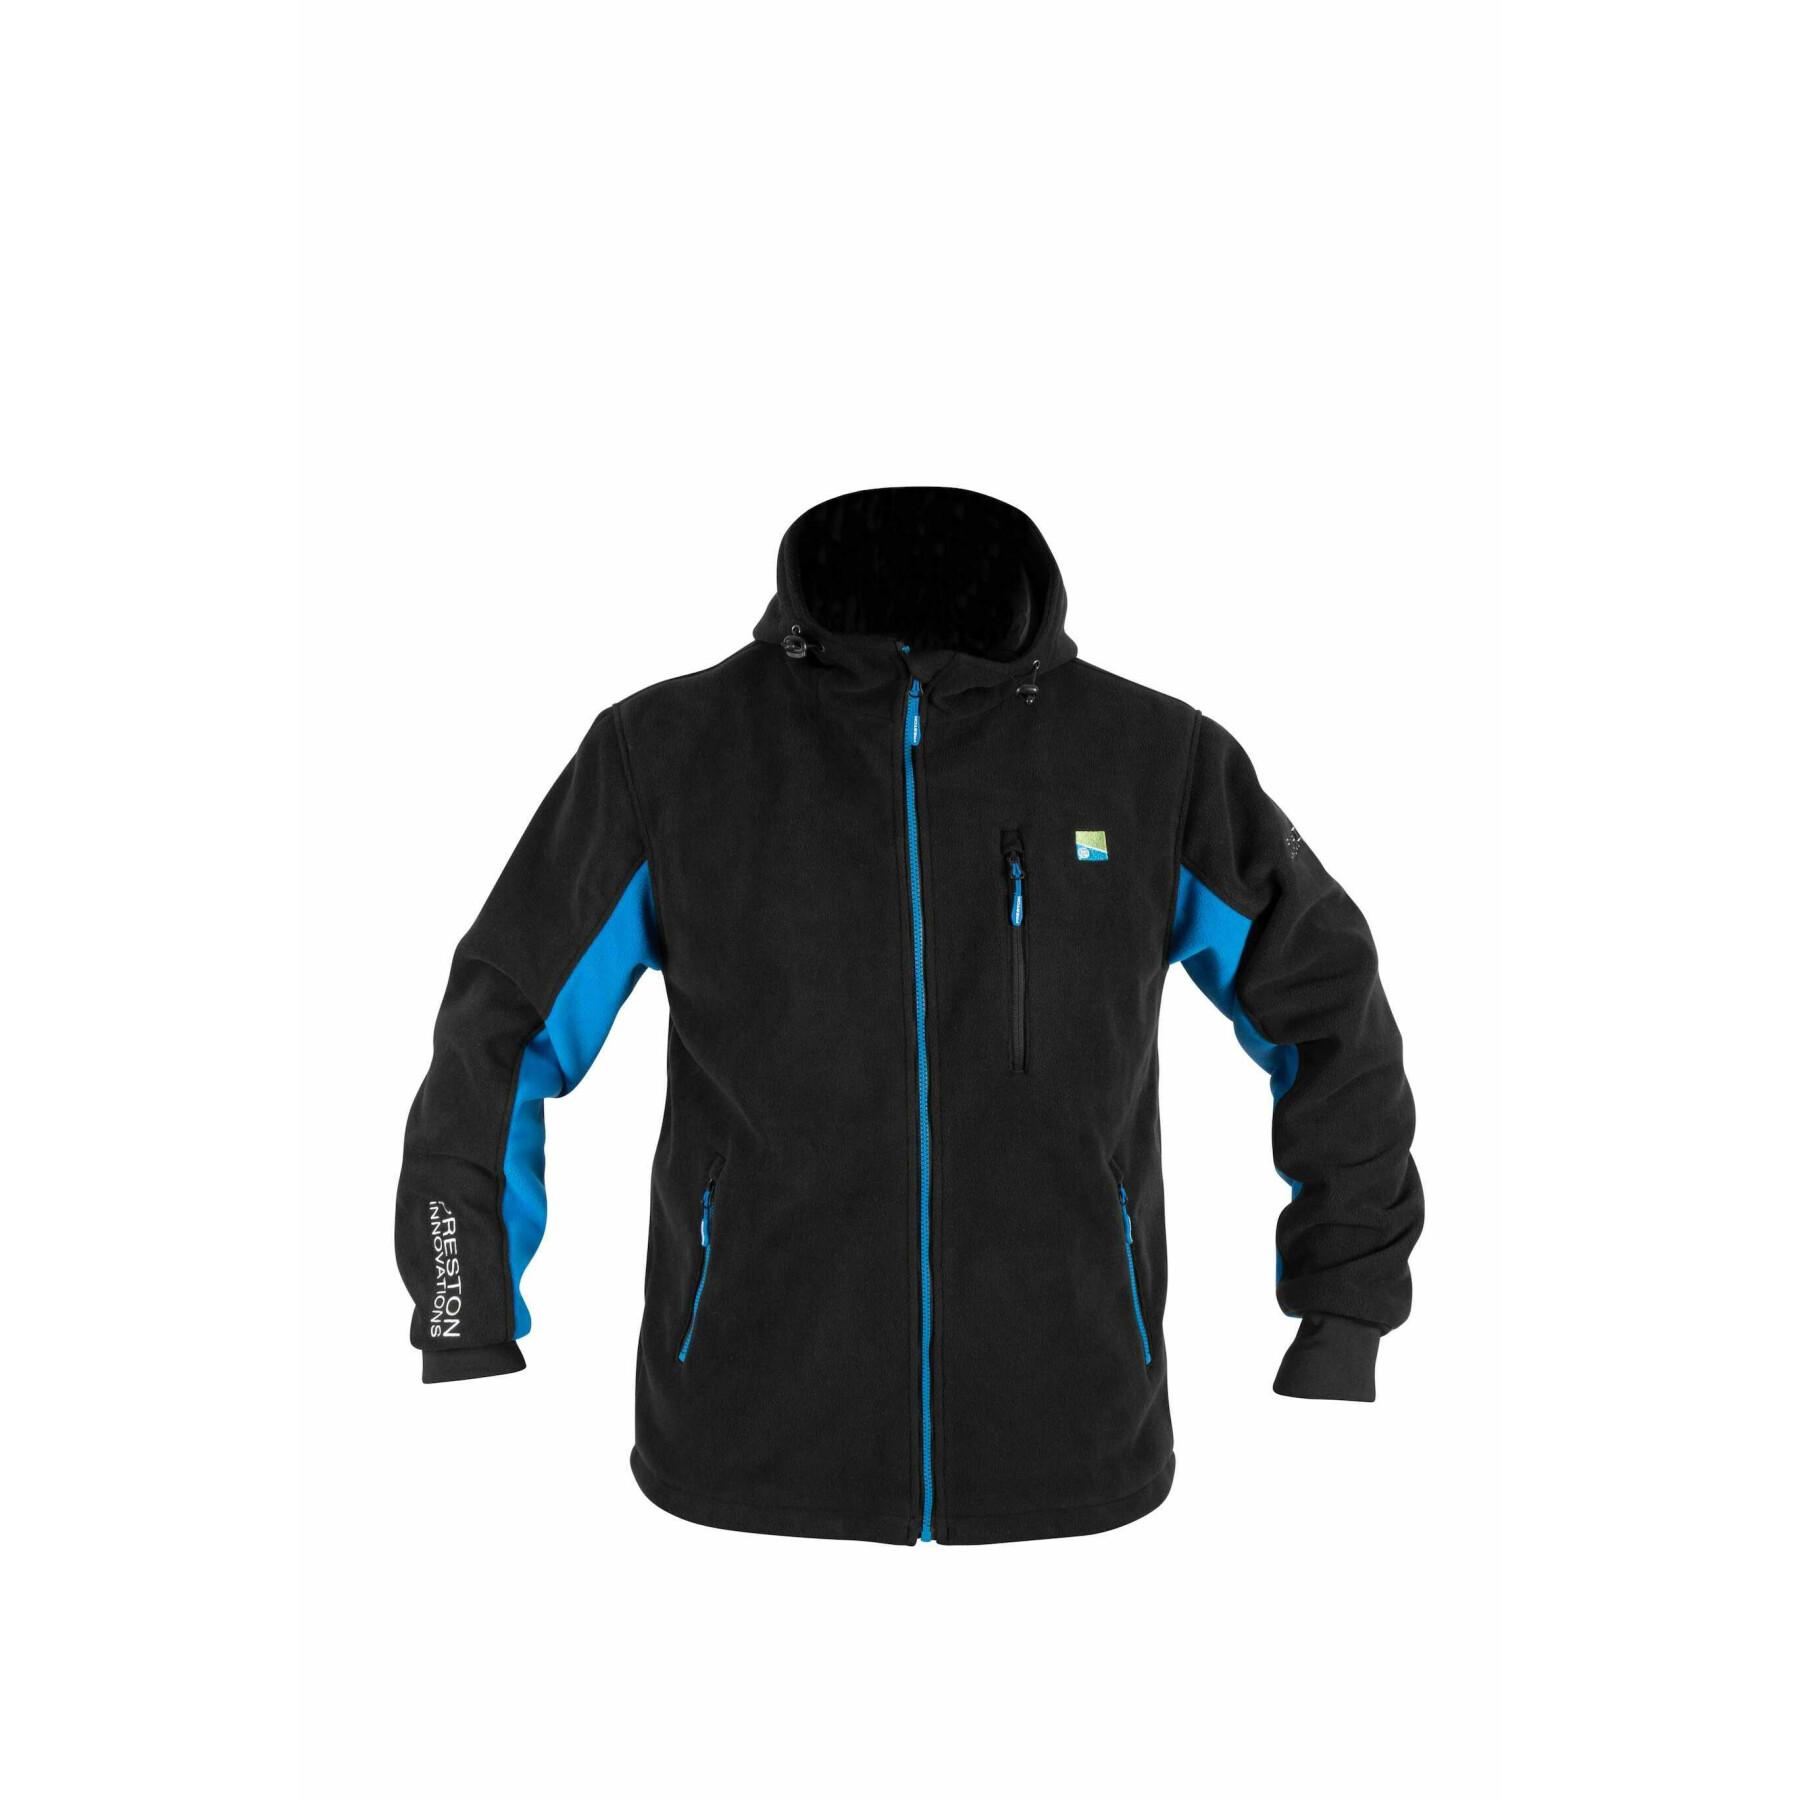 Windproof fleece jacket Preston